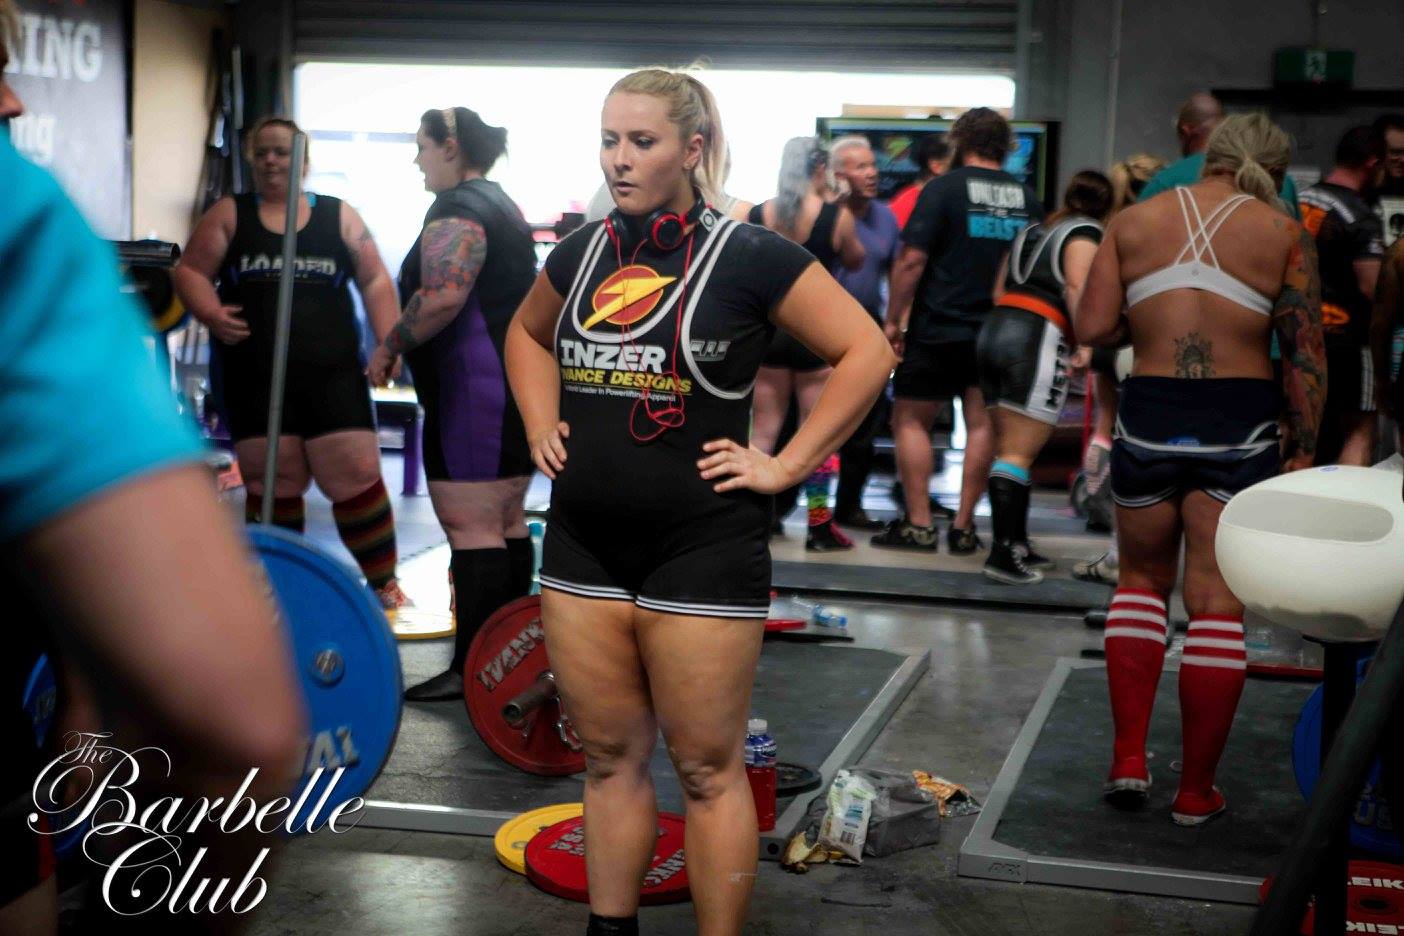 Ladies of lifting: Women to showcase their strength